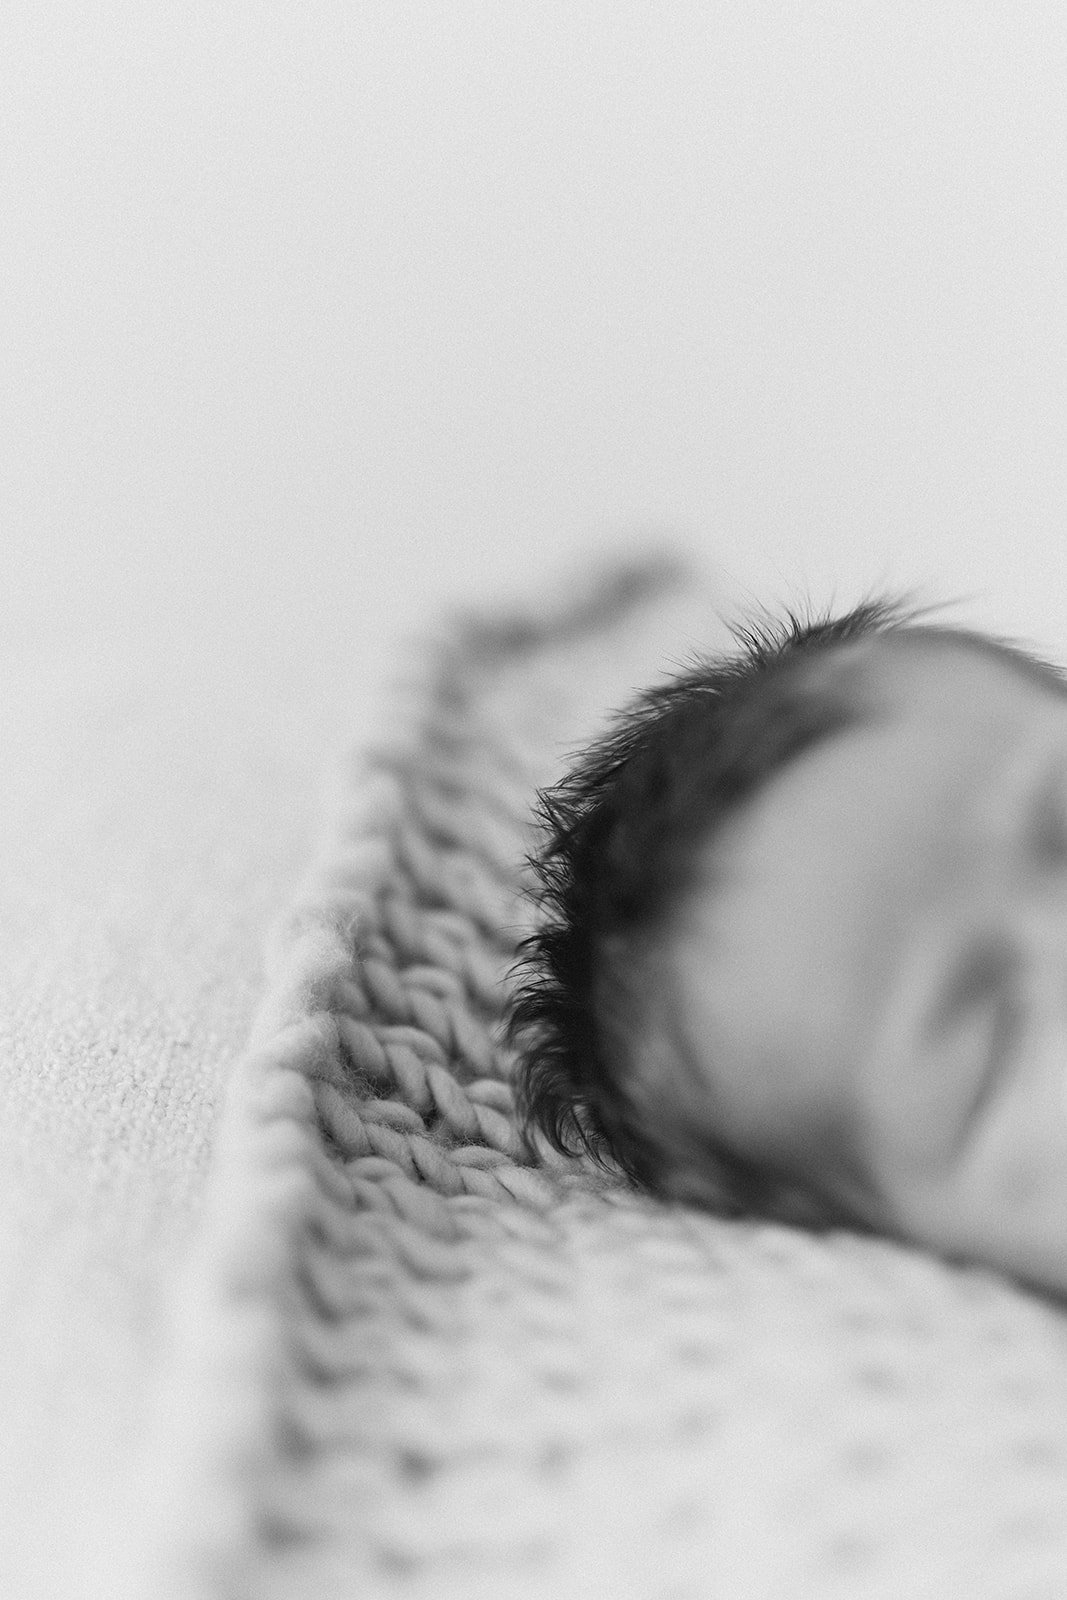 Newborn baby girl with spikey hair in RinkaDink Studio, Belfast, Northern Ireland.